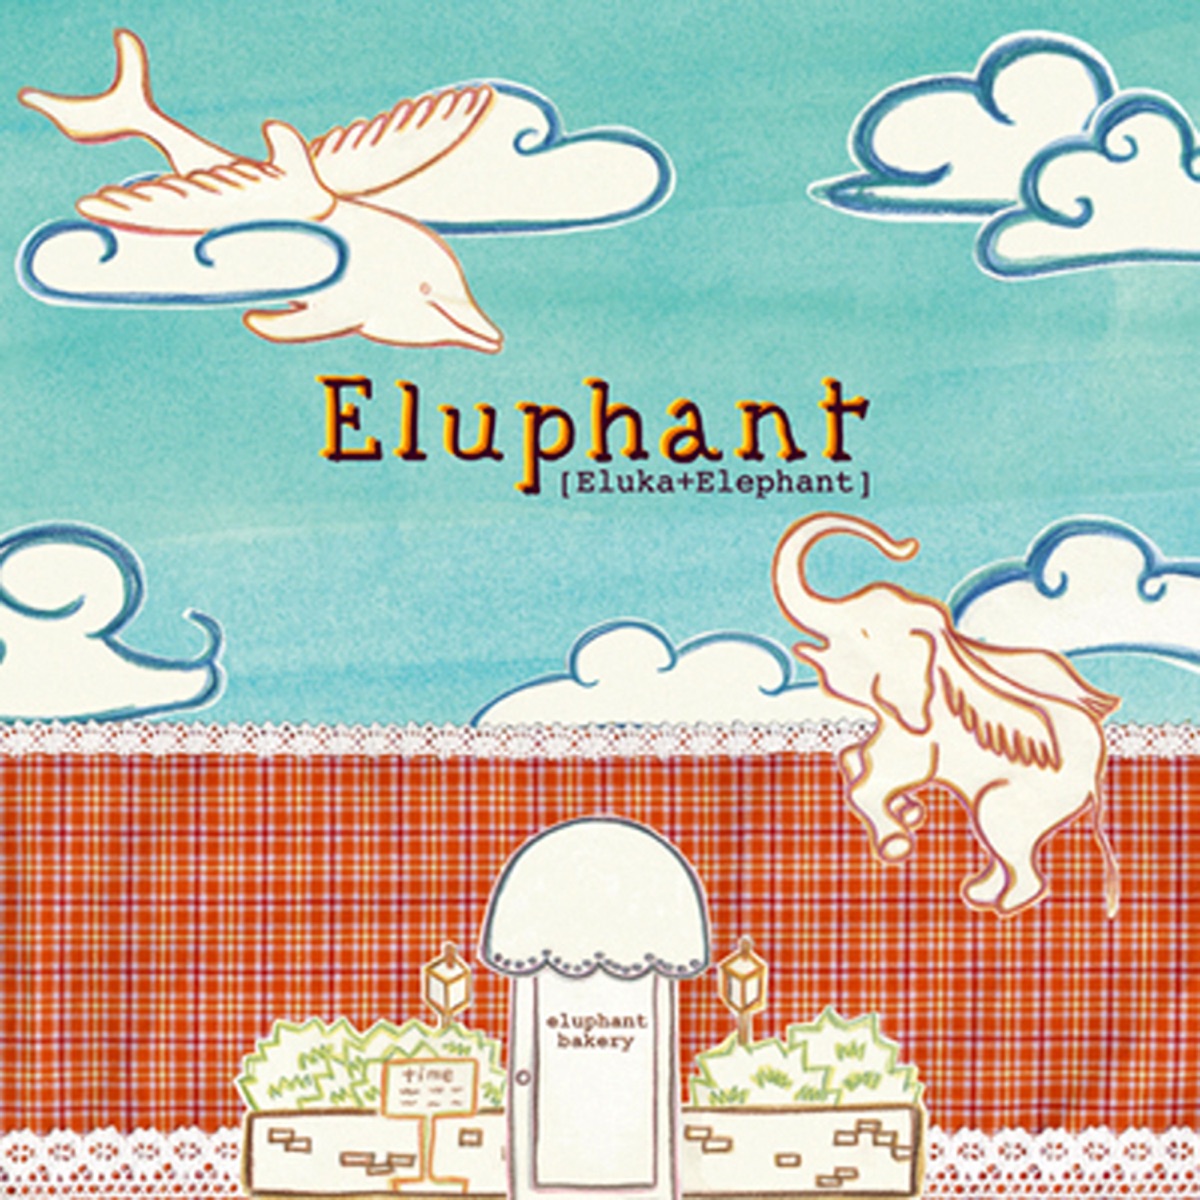 Eluphant – Eluphant Bakery